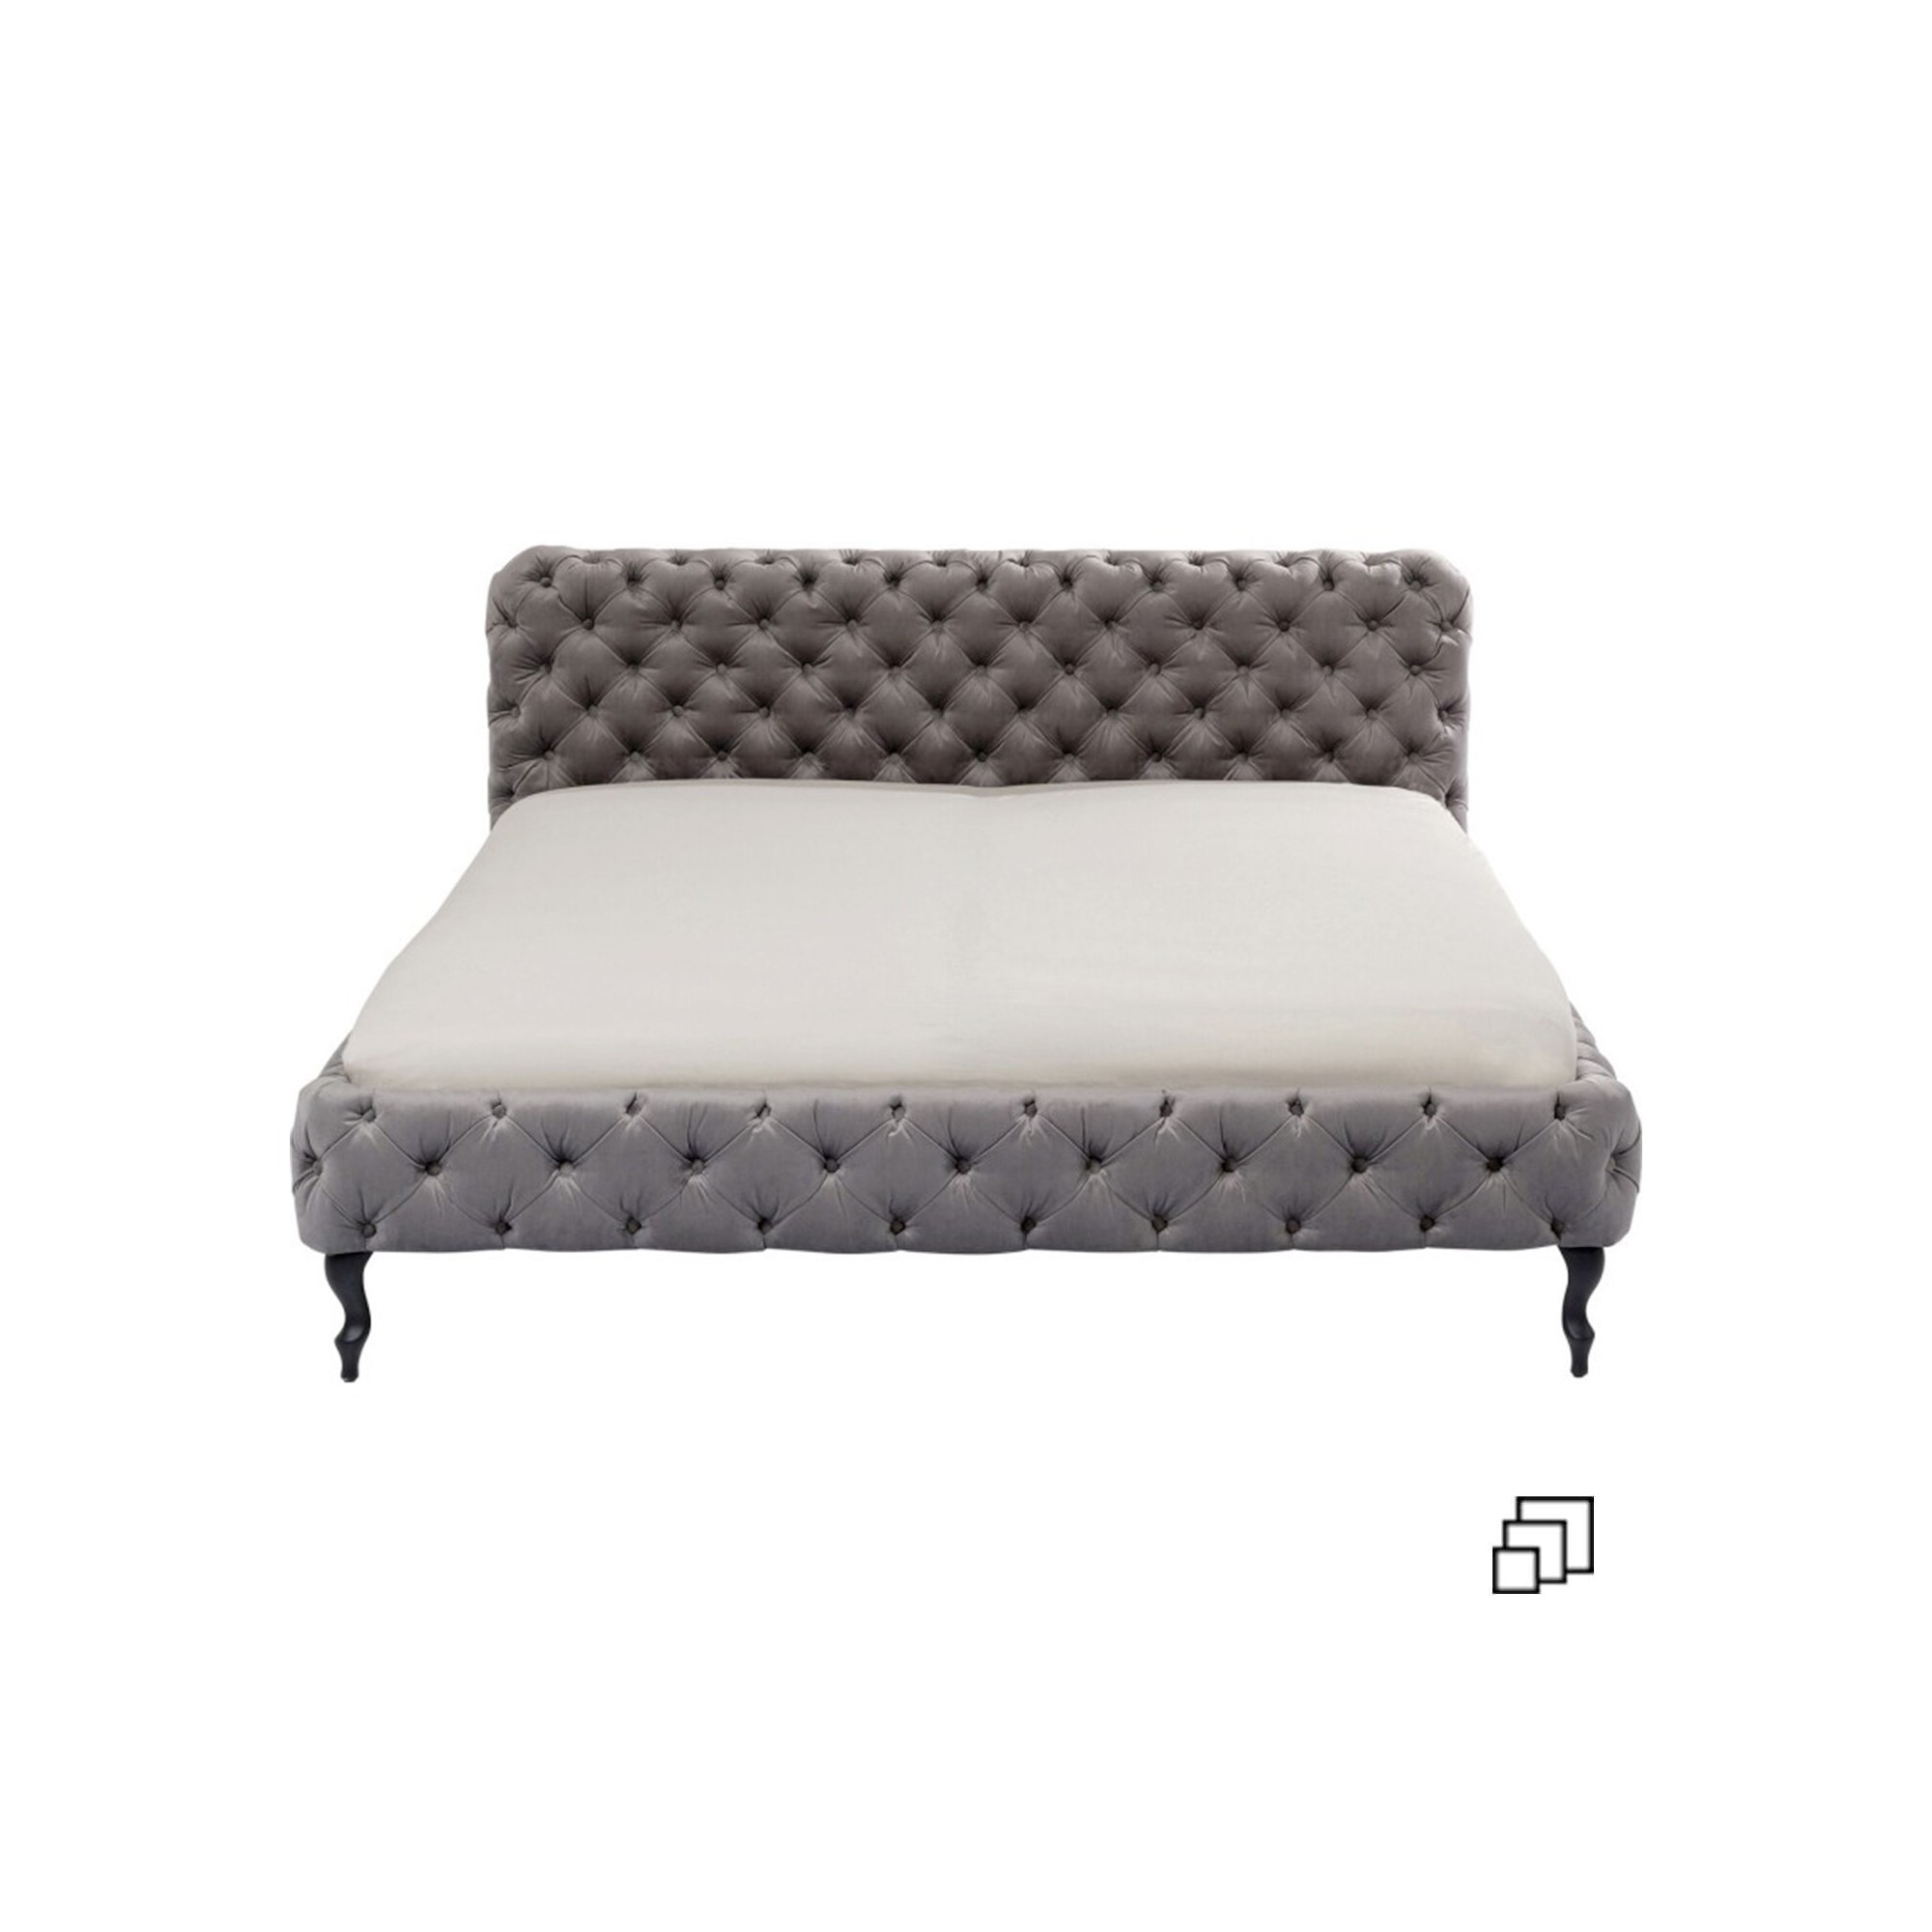 Bed Desire Velvet Silver Grey 160x200 cm Kare Design